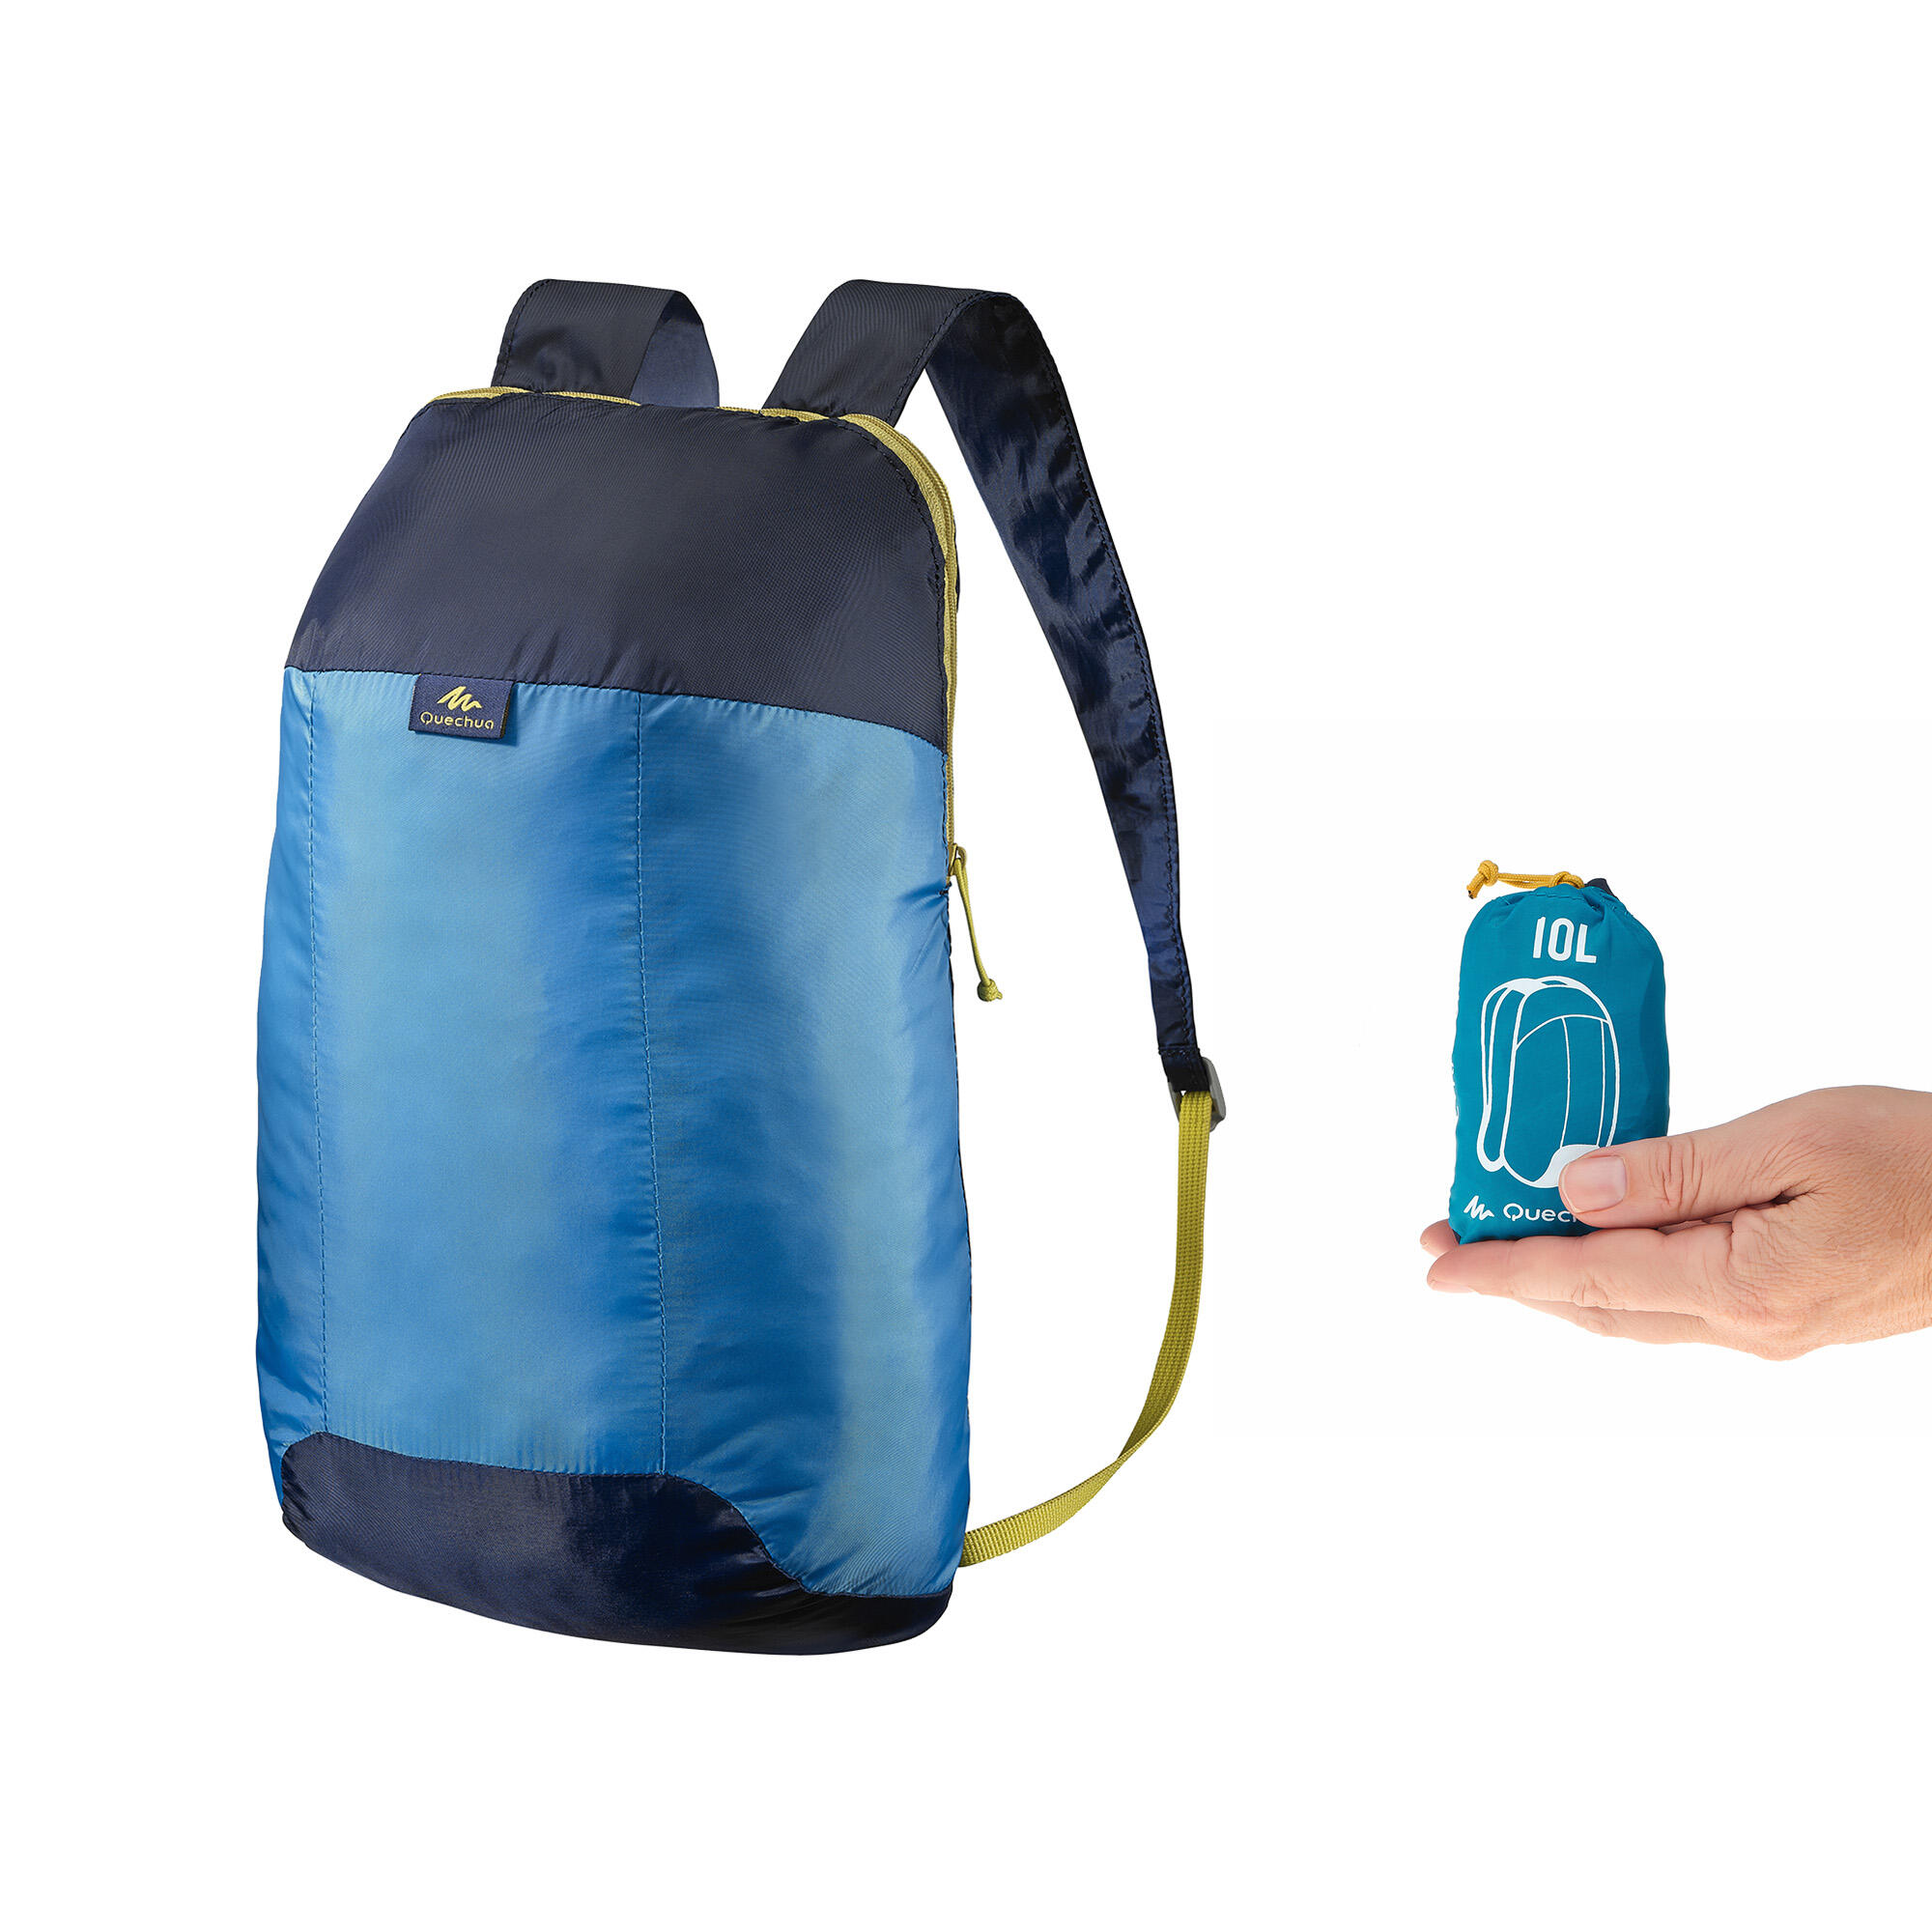 decathlon ultra compact backpack